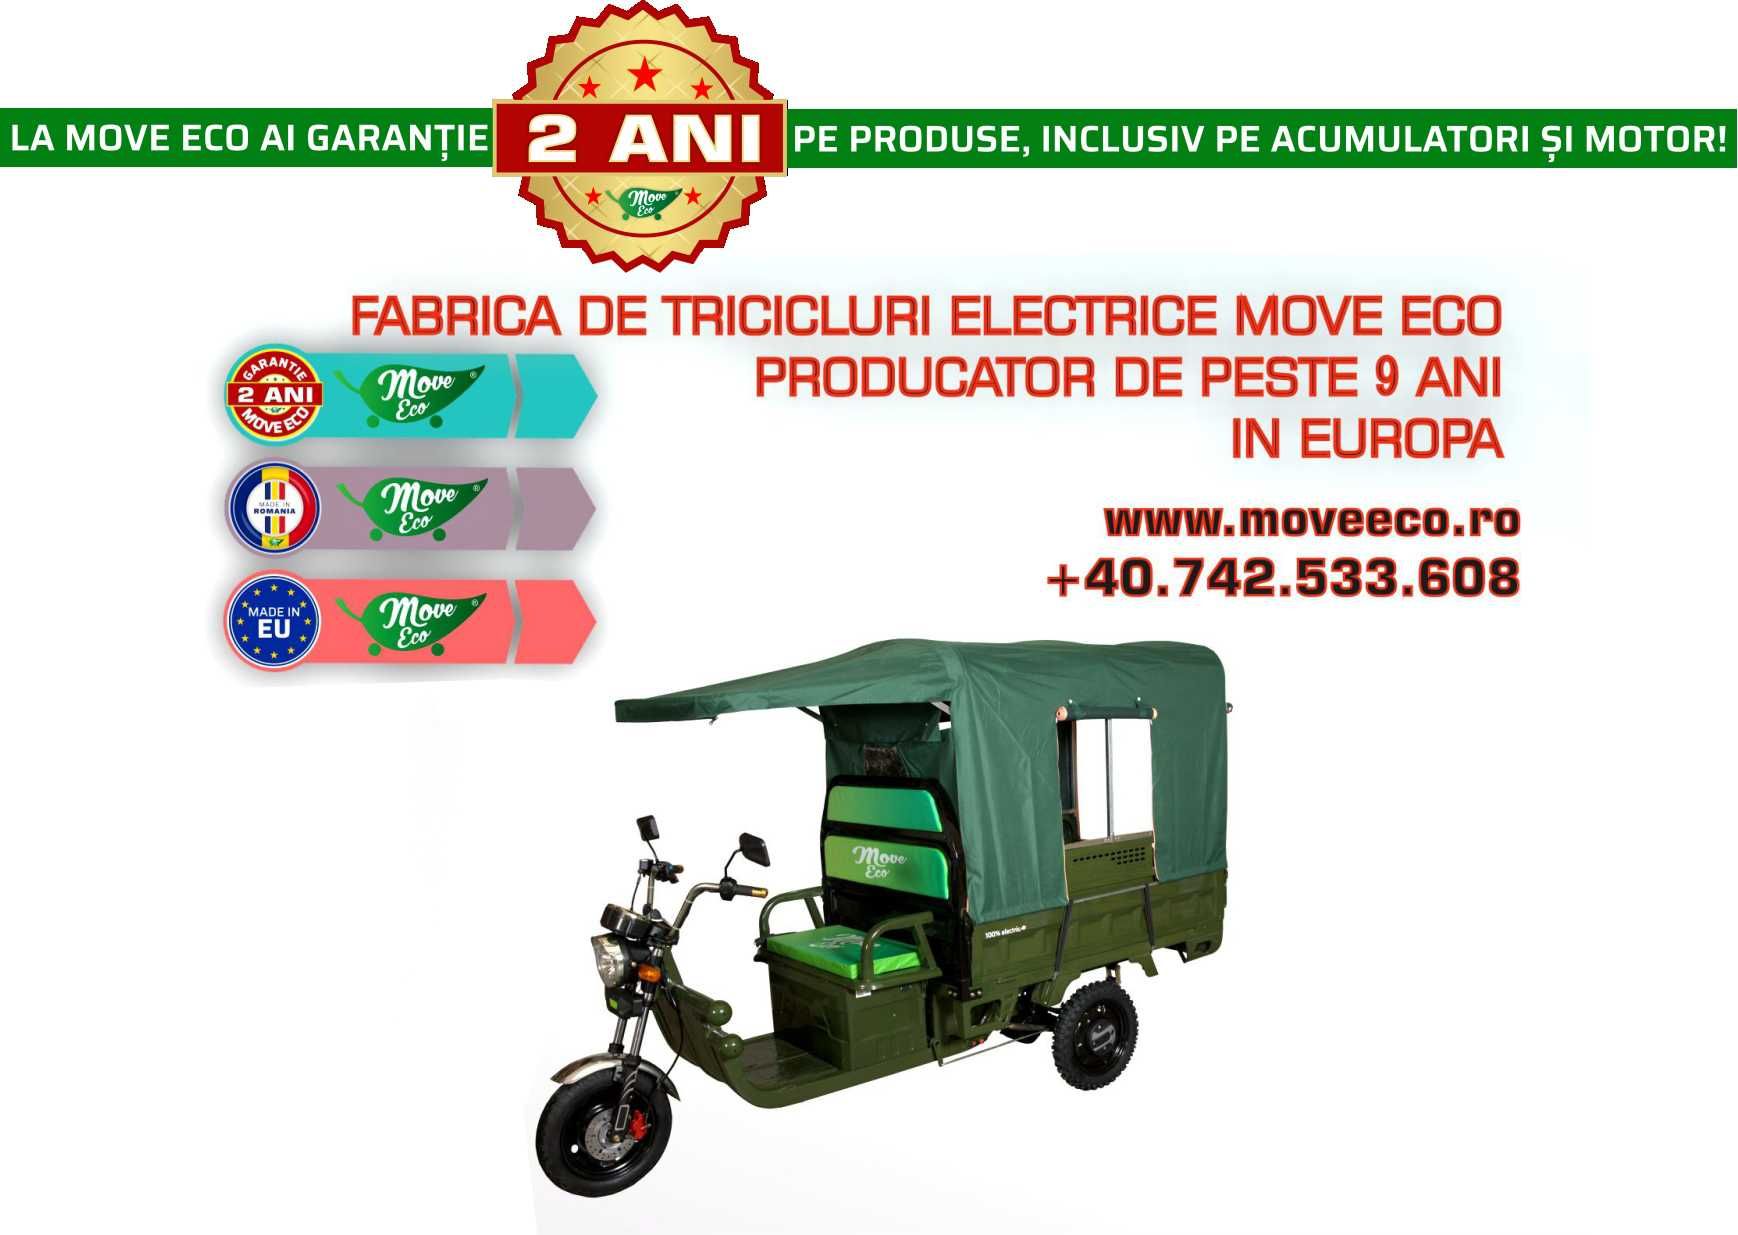 Triciclu electric omologat MoveEco / remorca /Prelata&offroad optional